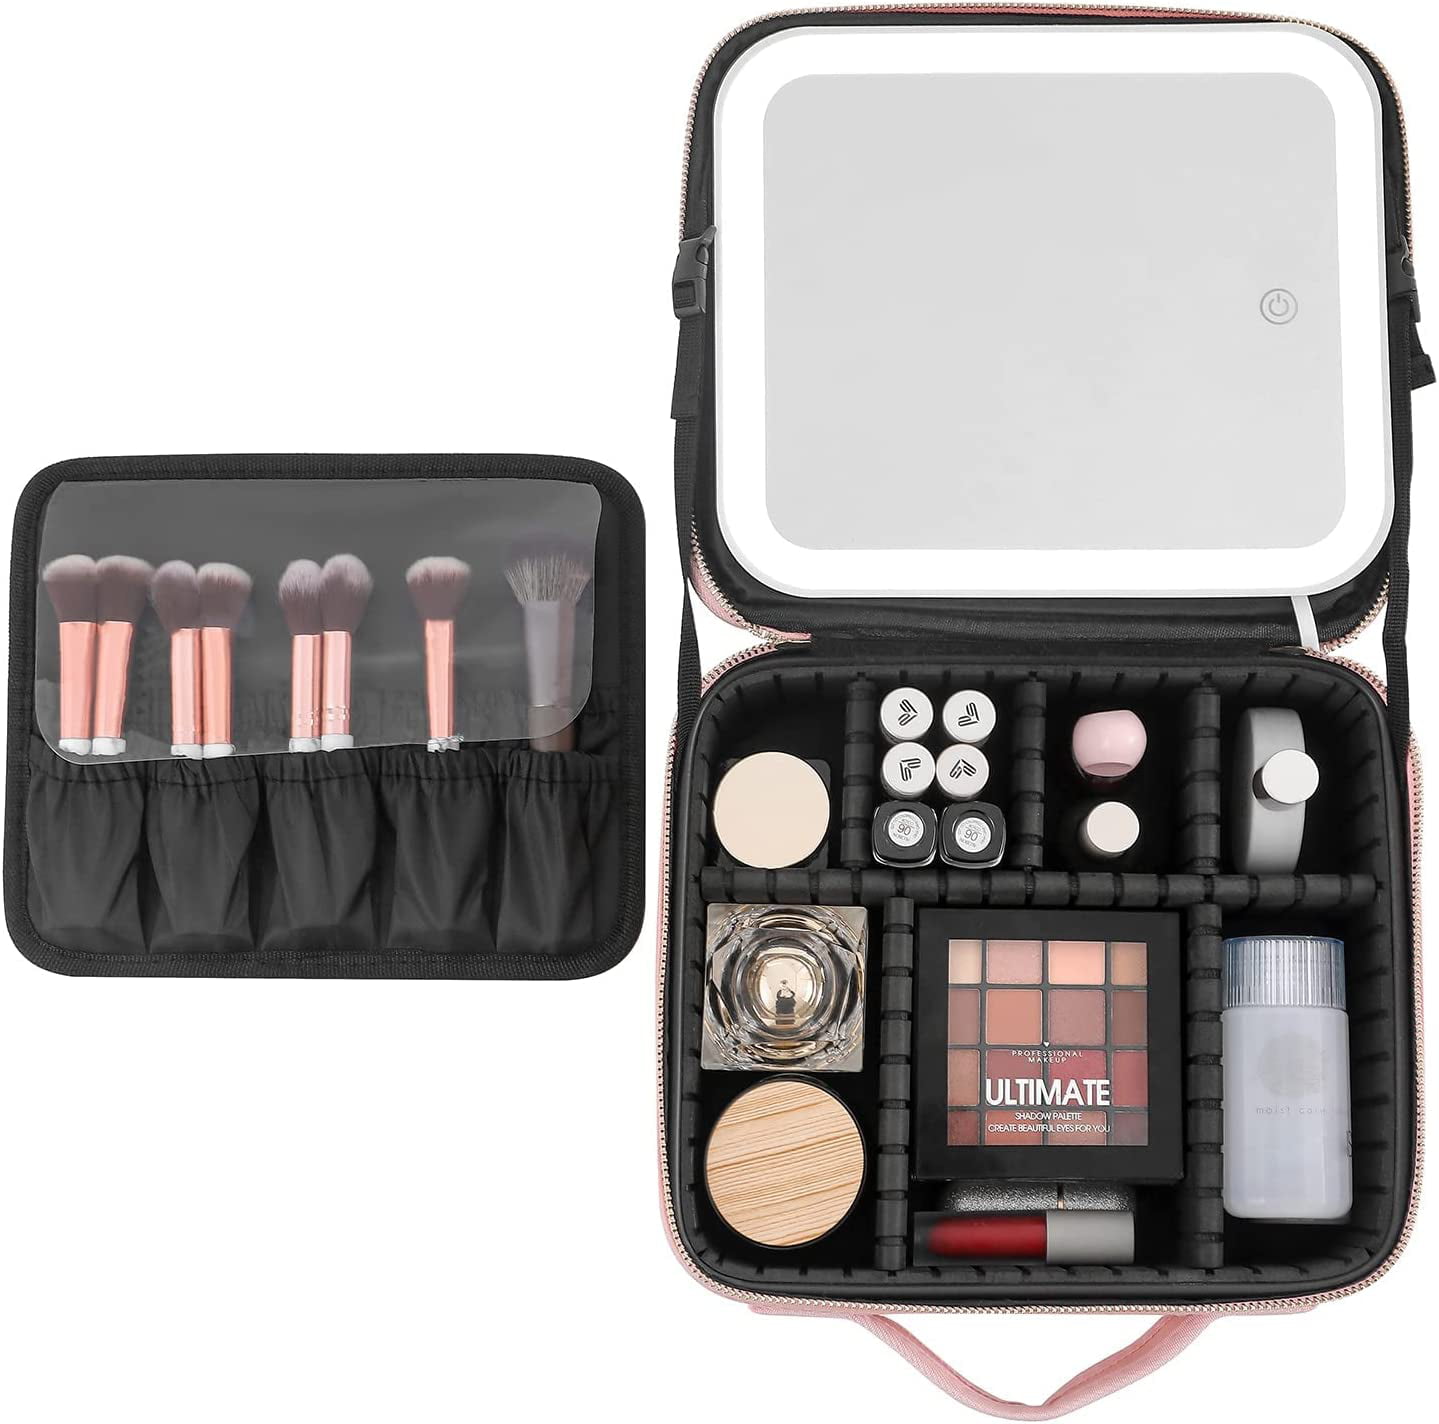 Katadem Travel Makeup Bag - Large Opening, Portable, Grid-Pink